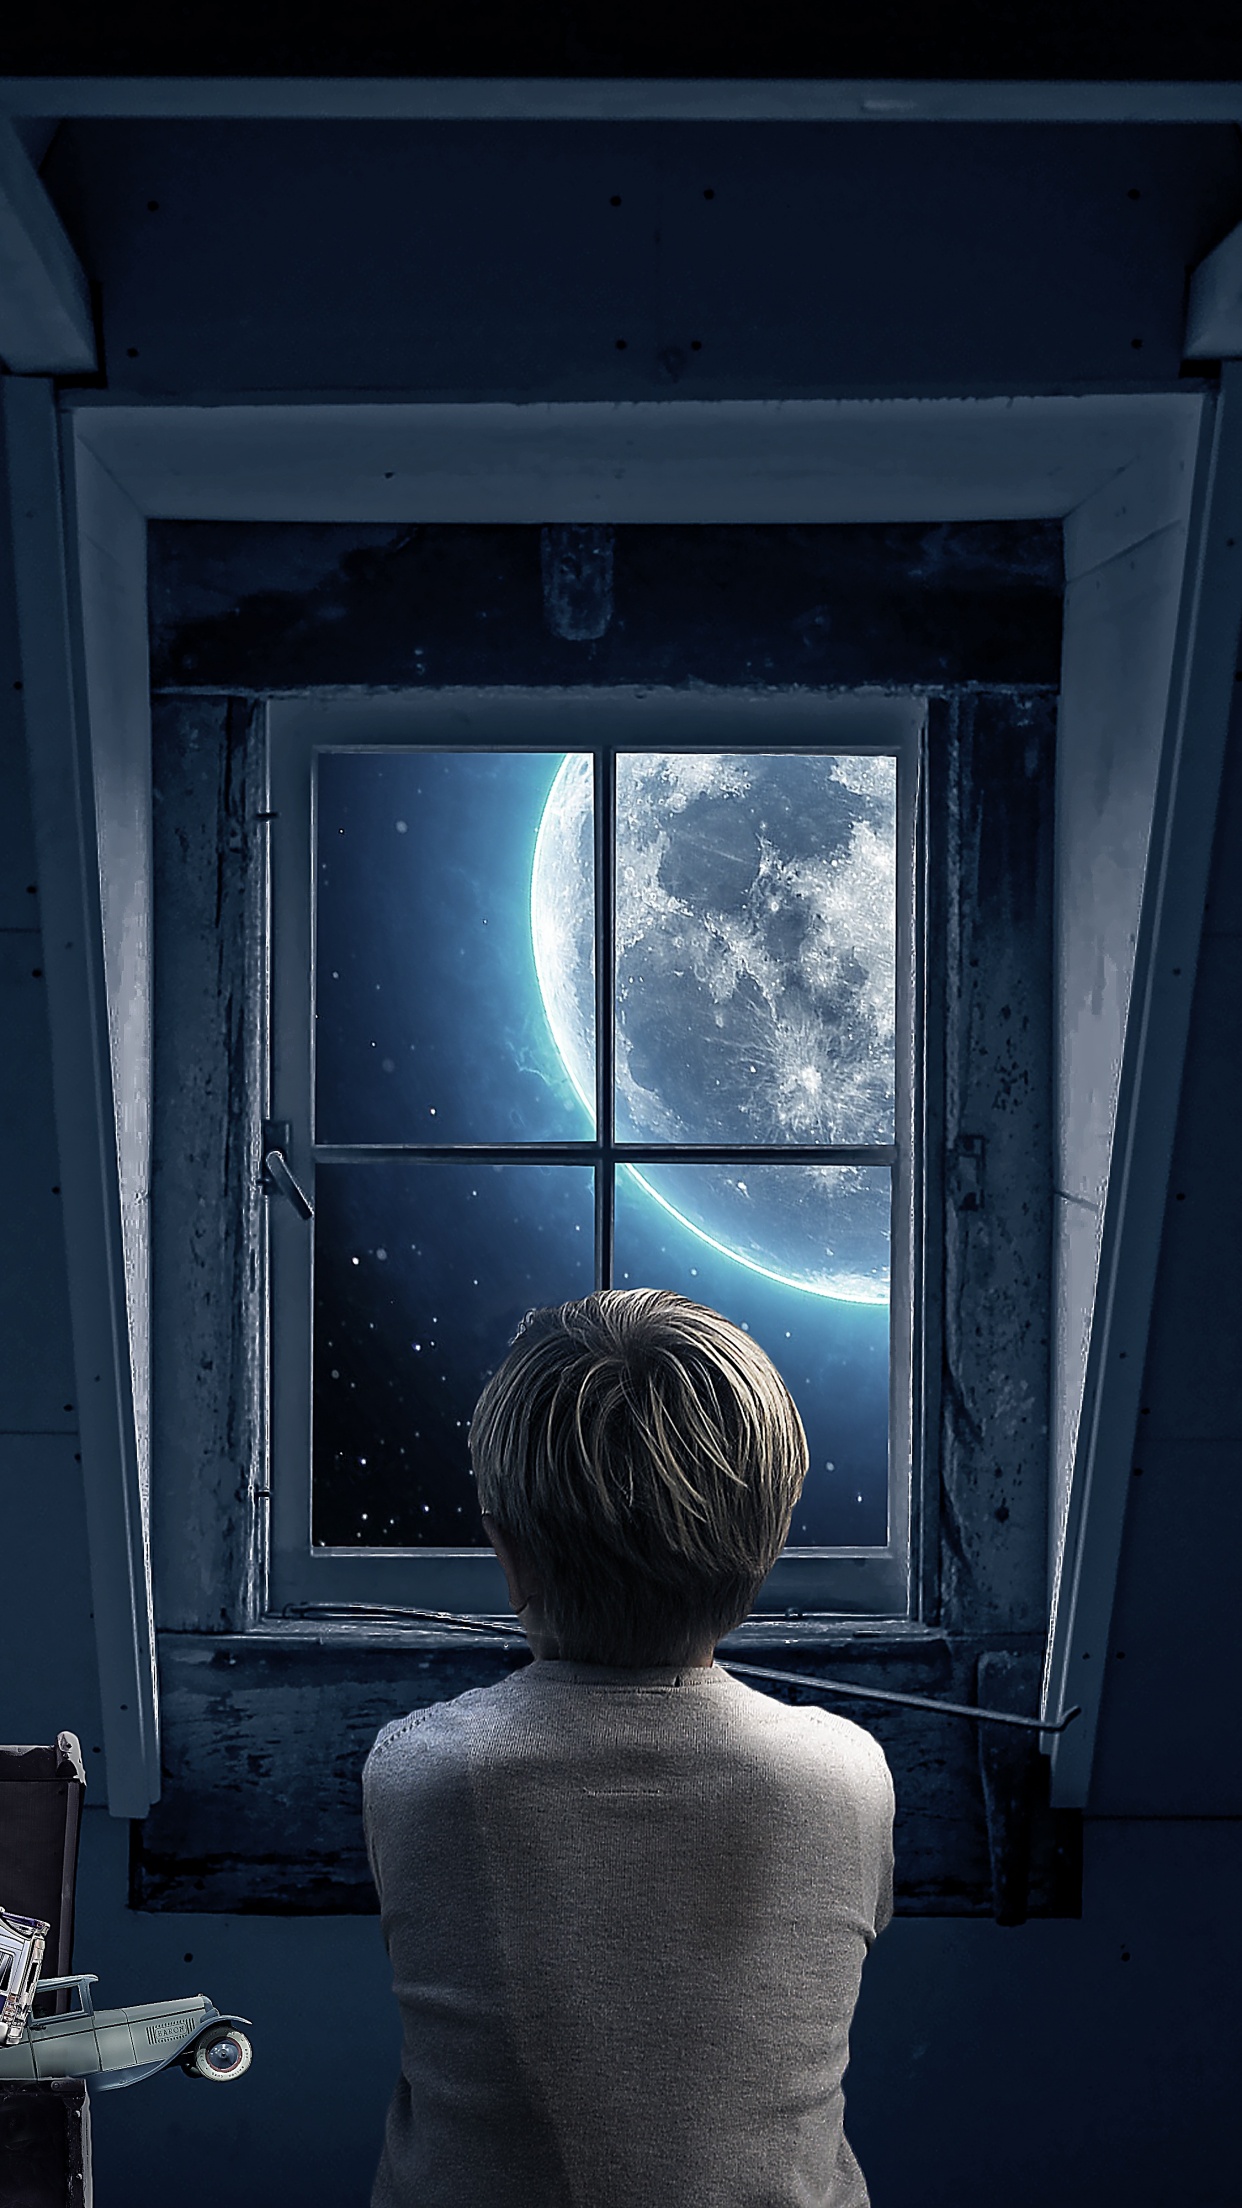 Look through the Window Wallpaper 4K, Full moon, Attic, Roof, Boy